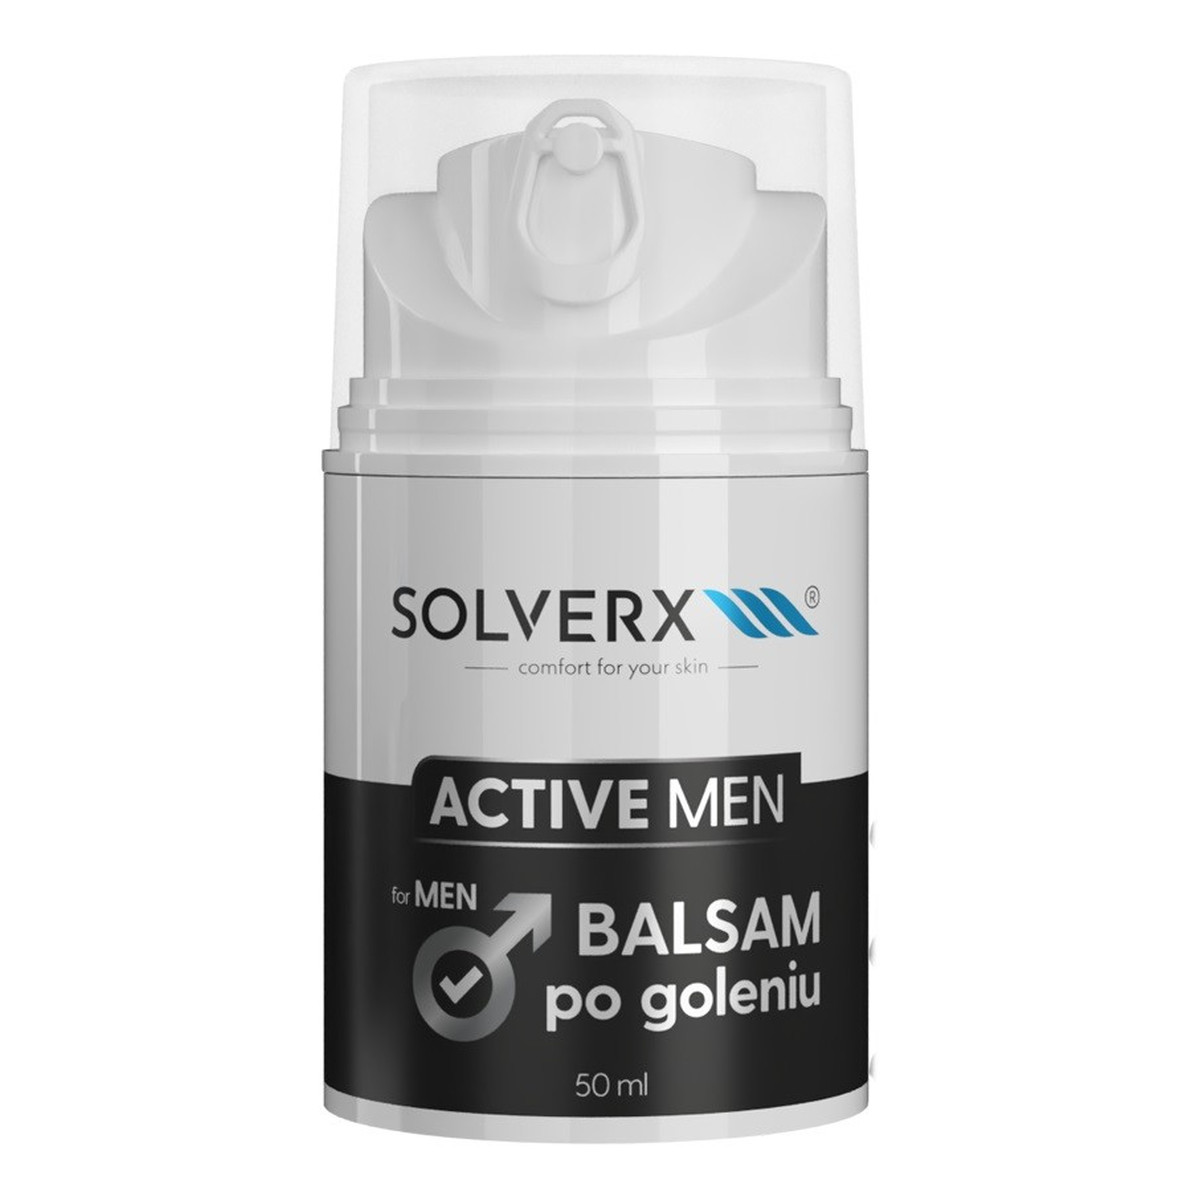 Solverx Active Men Balsam po goleniu 50ml